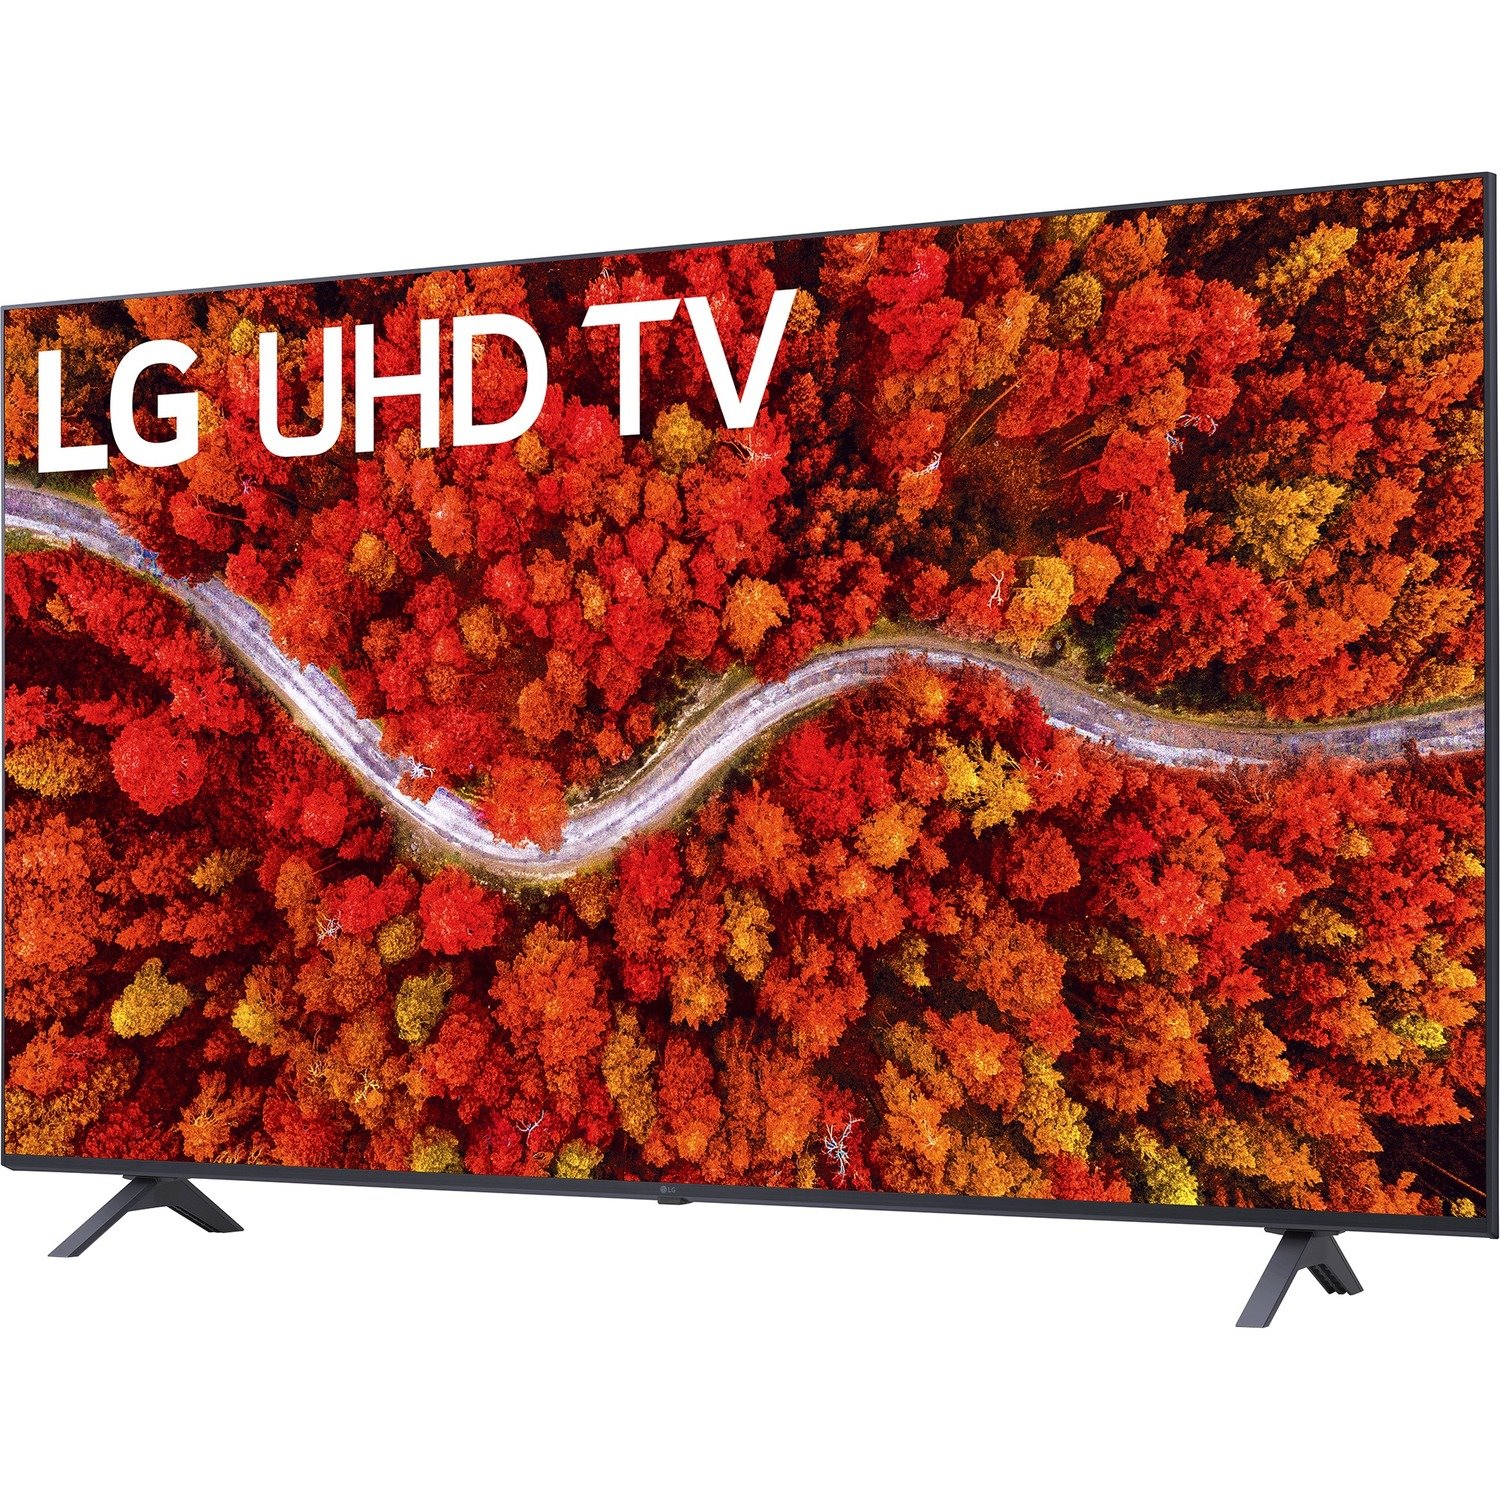 LG 50UP8000PUA 50" Smart LED-LCD TV - 4K UHDTV